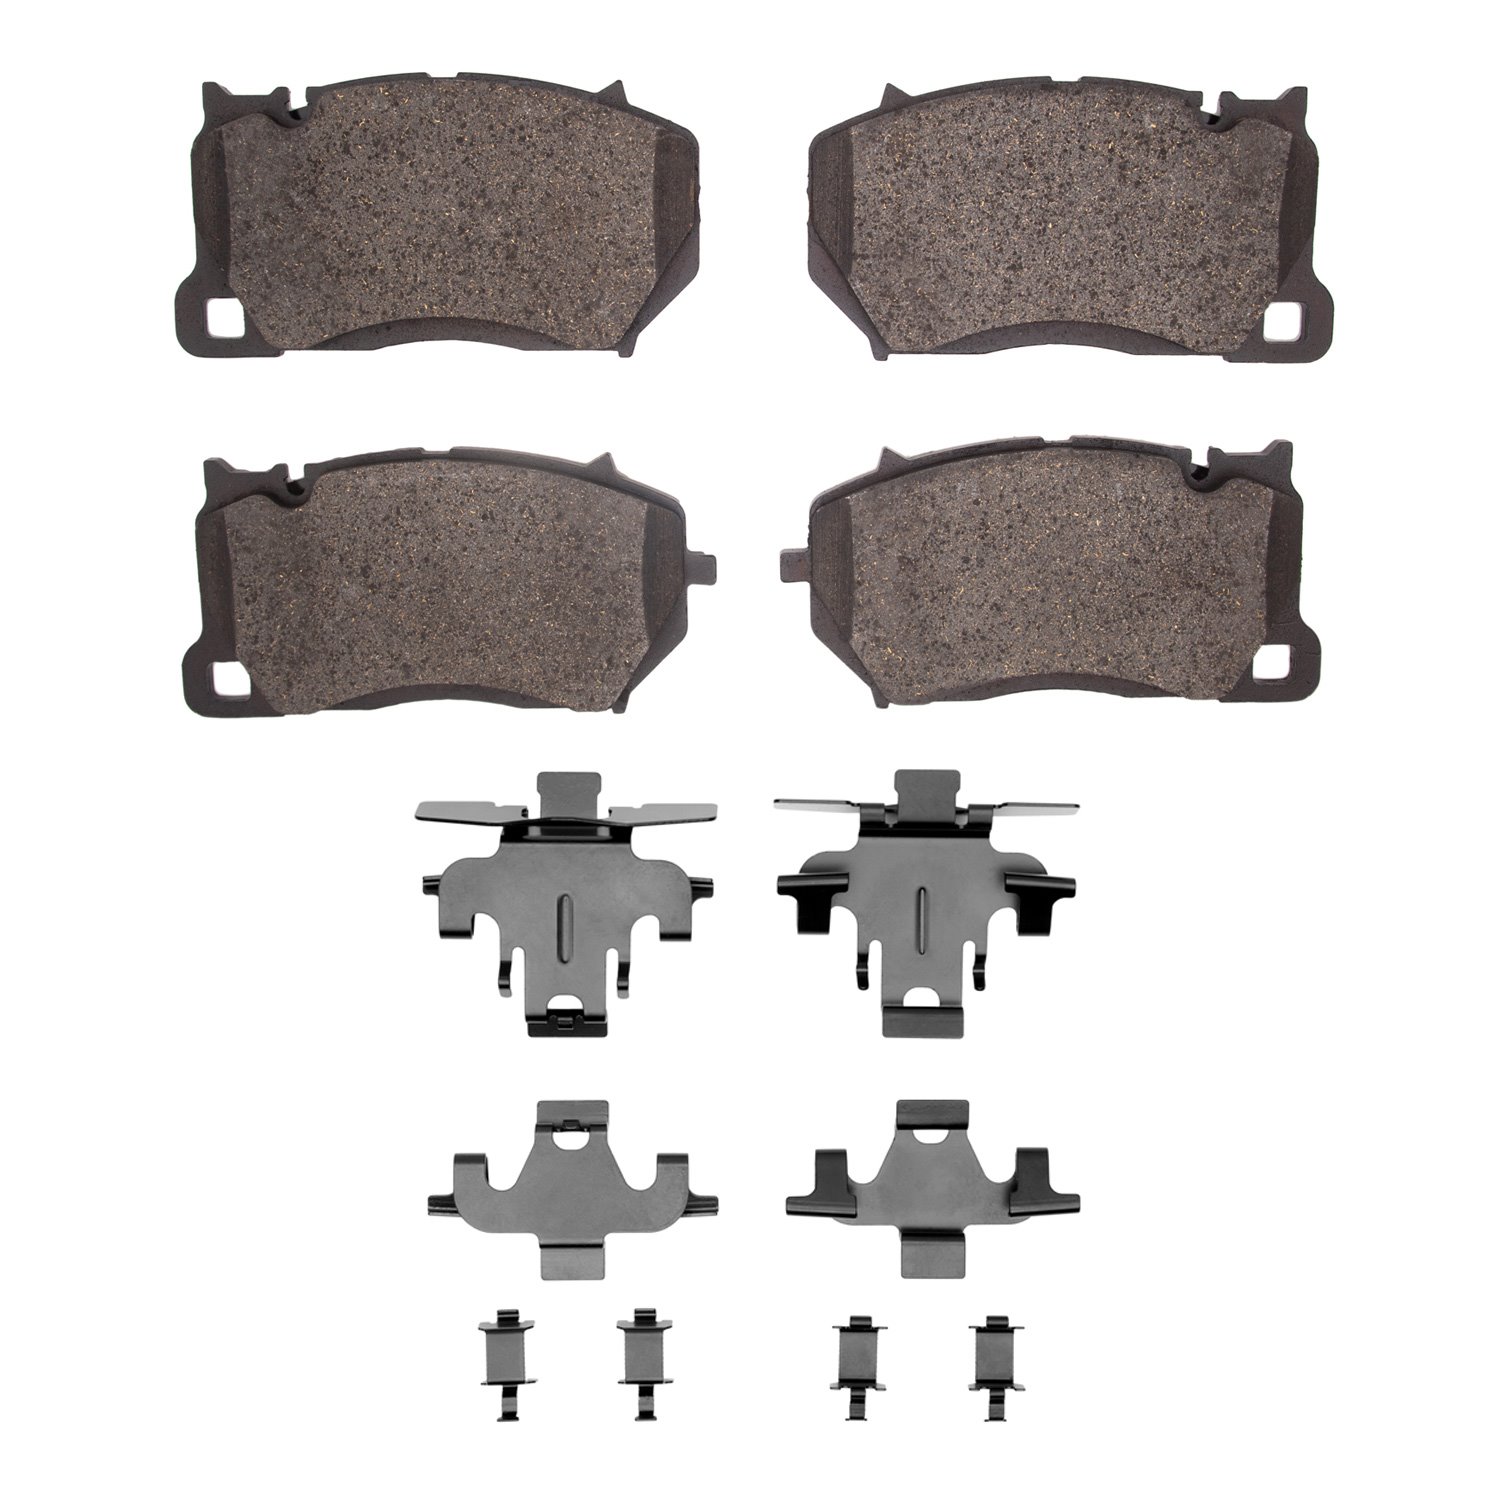 1551-1899-11 5000 Advanced Low-Metallic Brake Pads & Hardware Kit, 2019-2021 Porsche, Position: Front